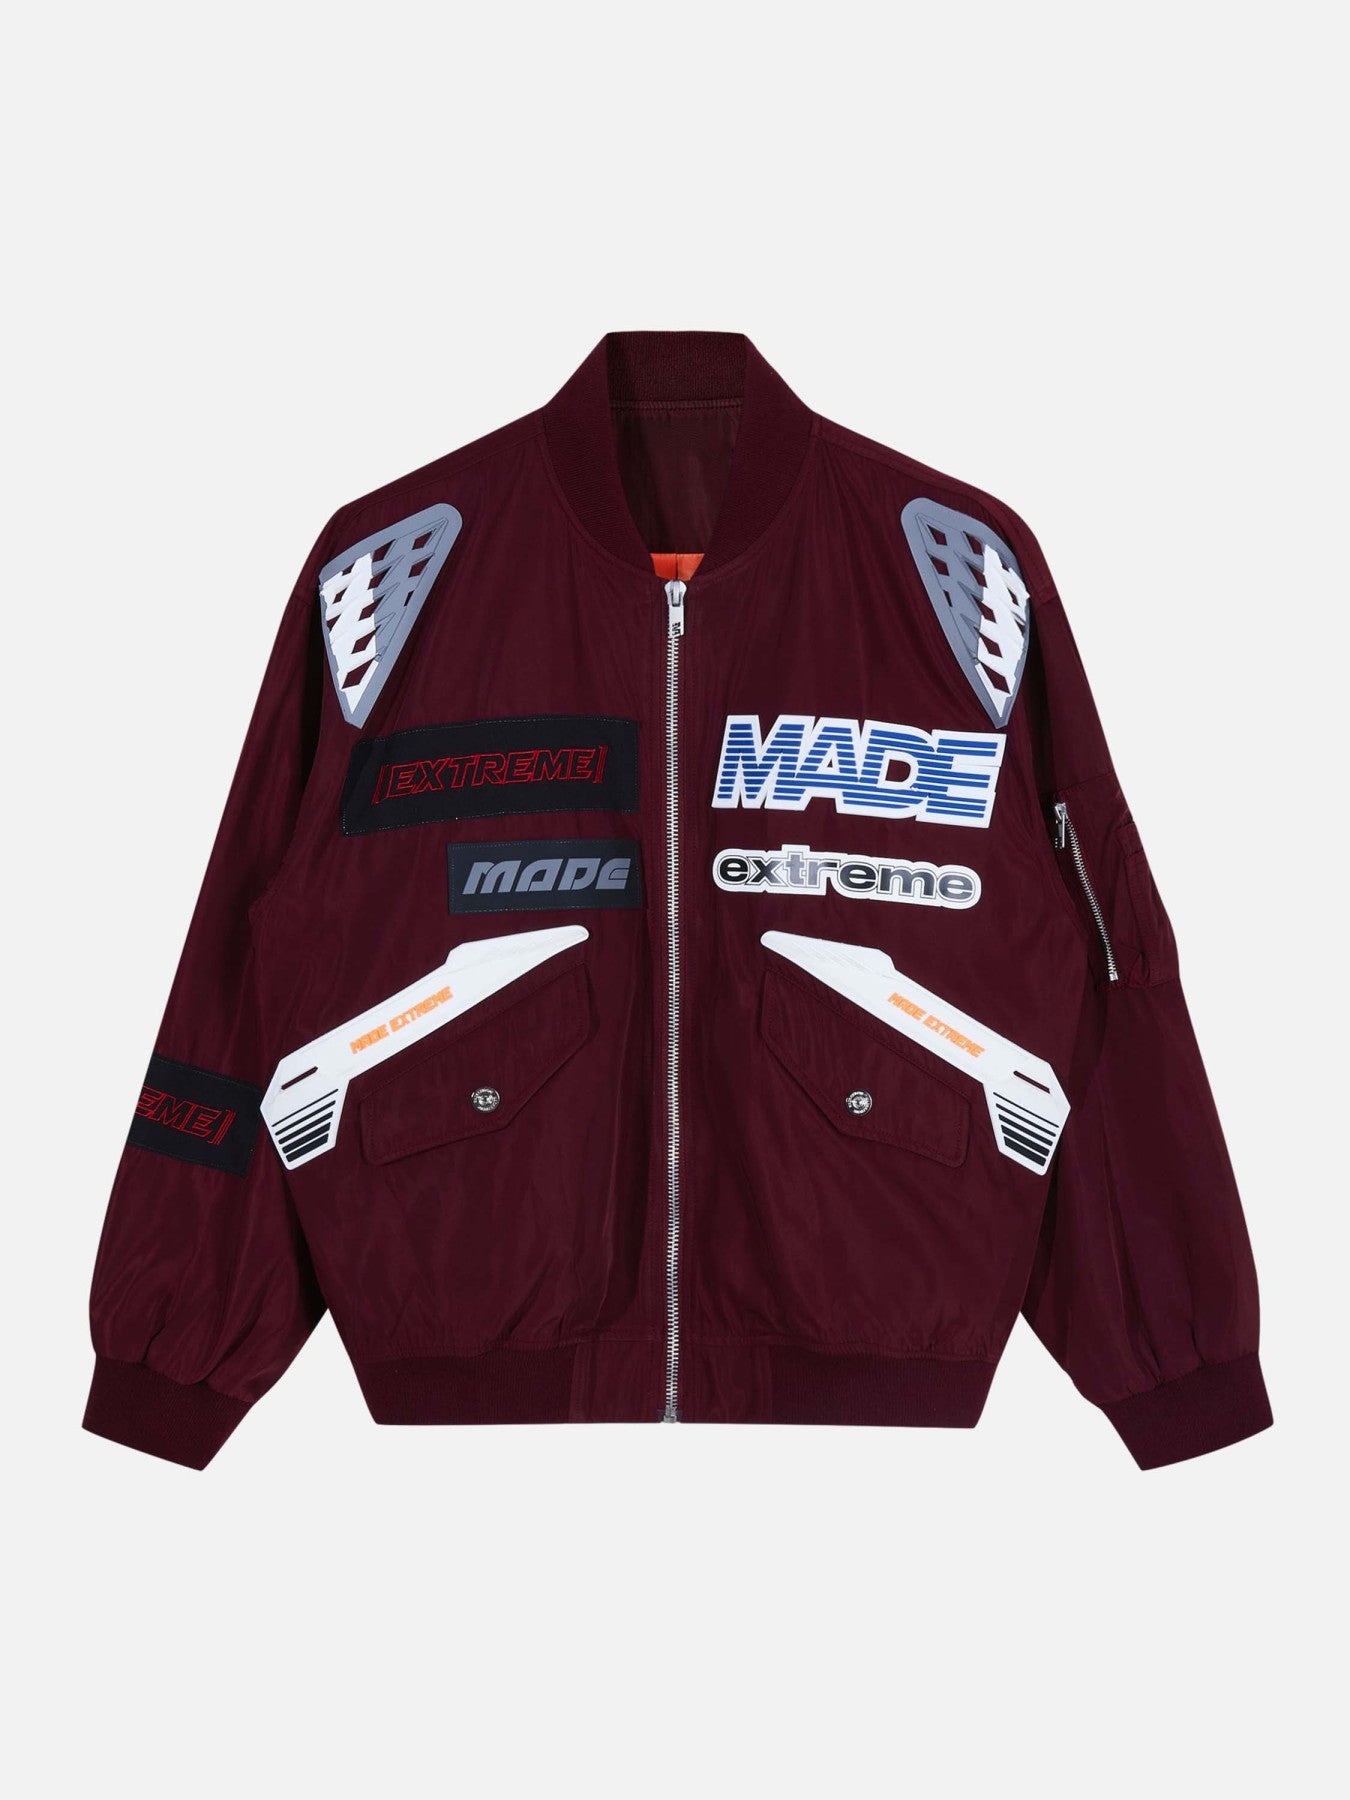 Thesupermade American Loose Racing Jacket